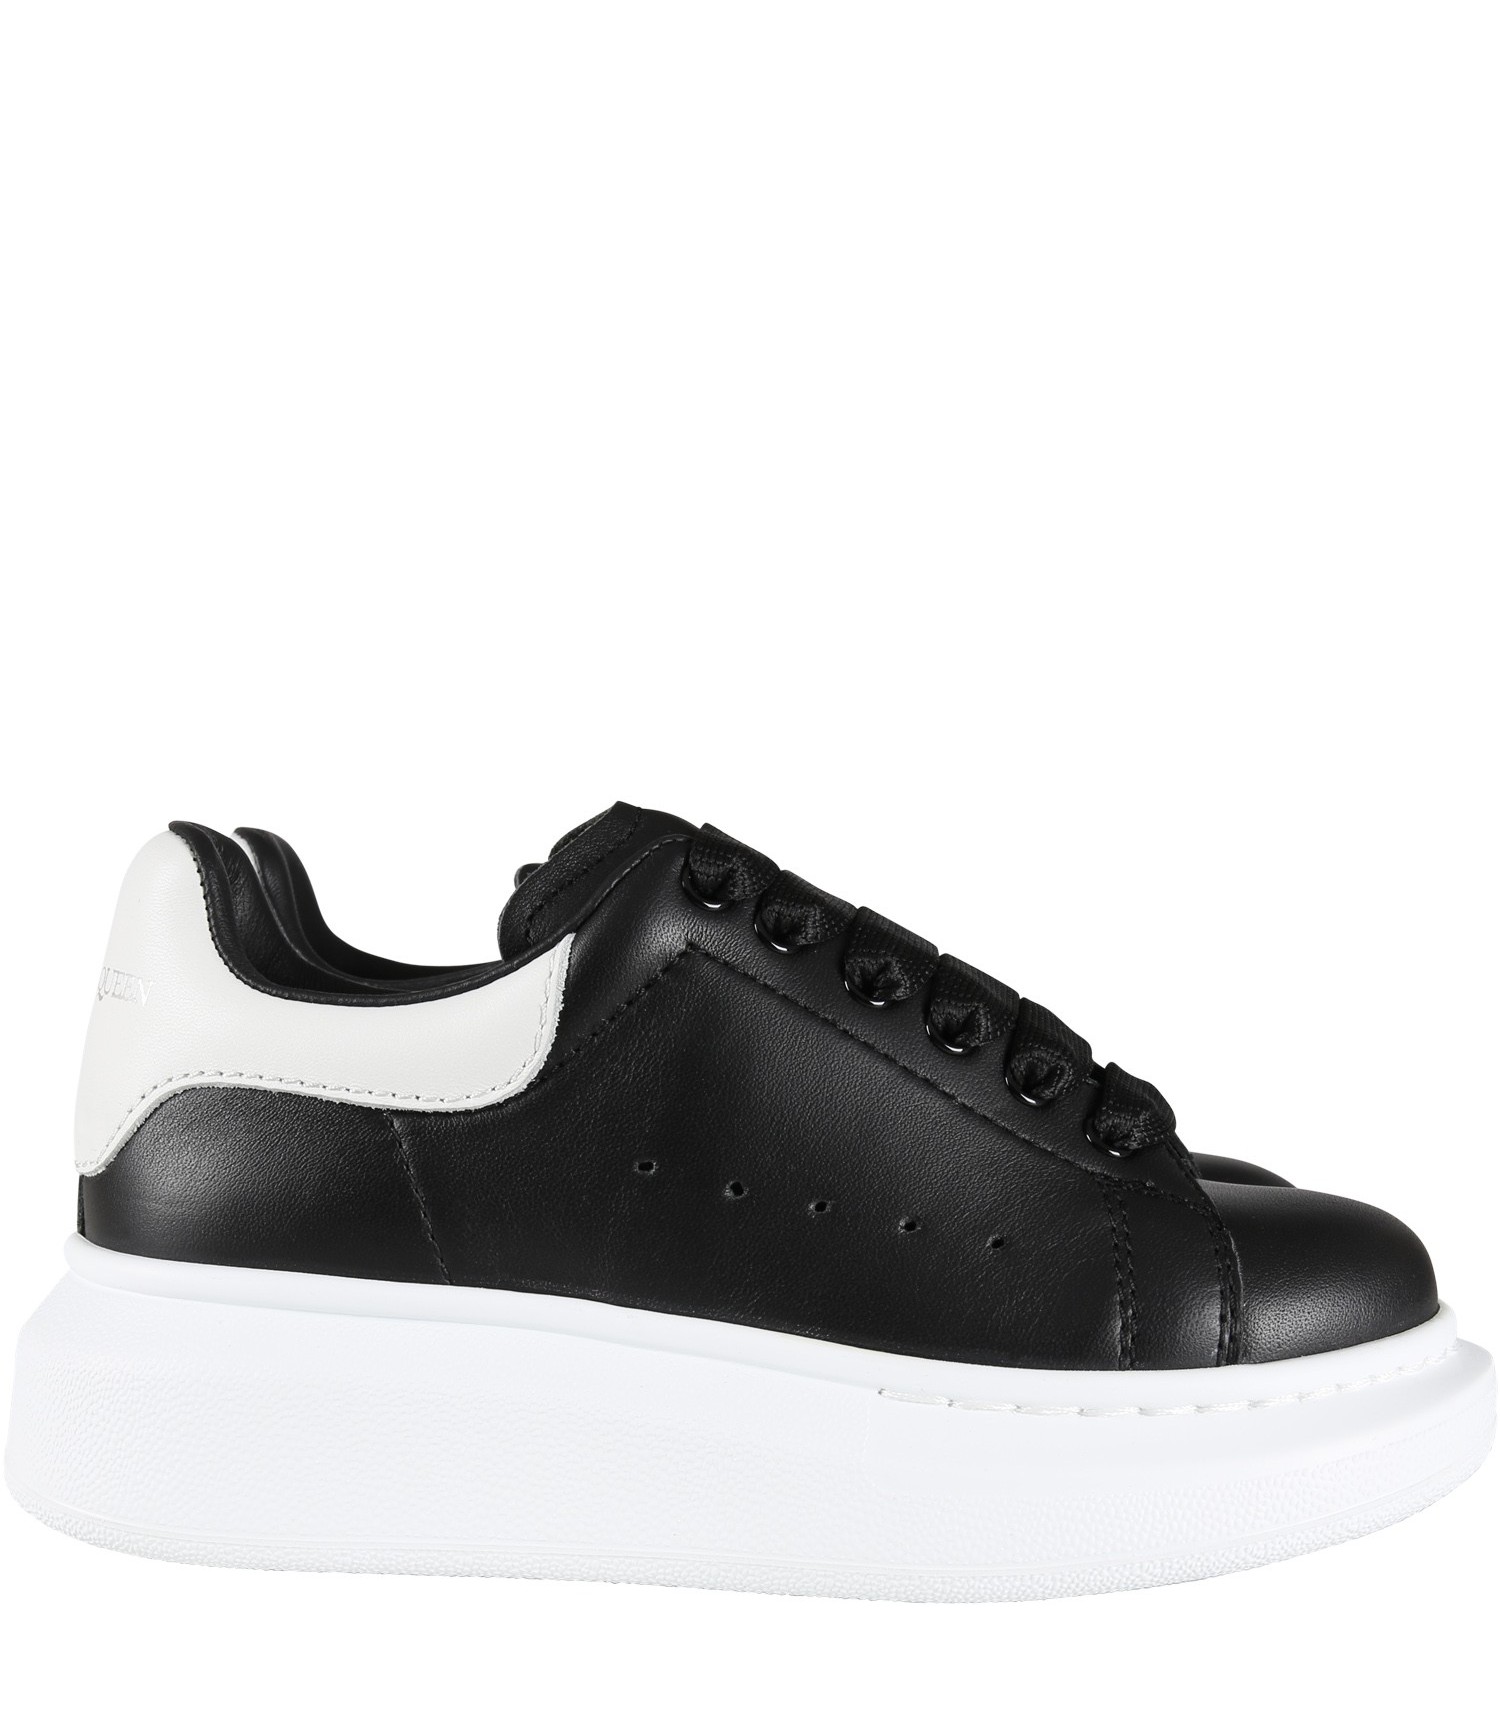 Alexander McQueen Sneakers nere per bambini con logo - CoccoleBimbi